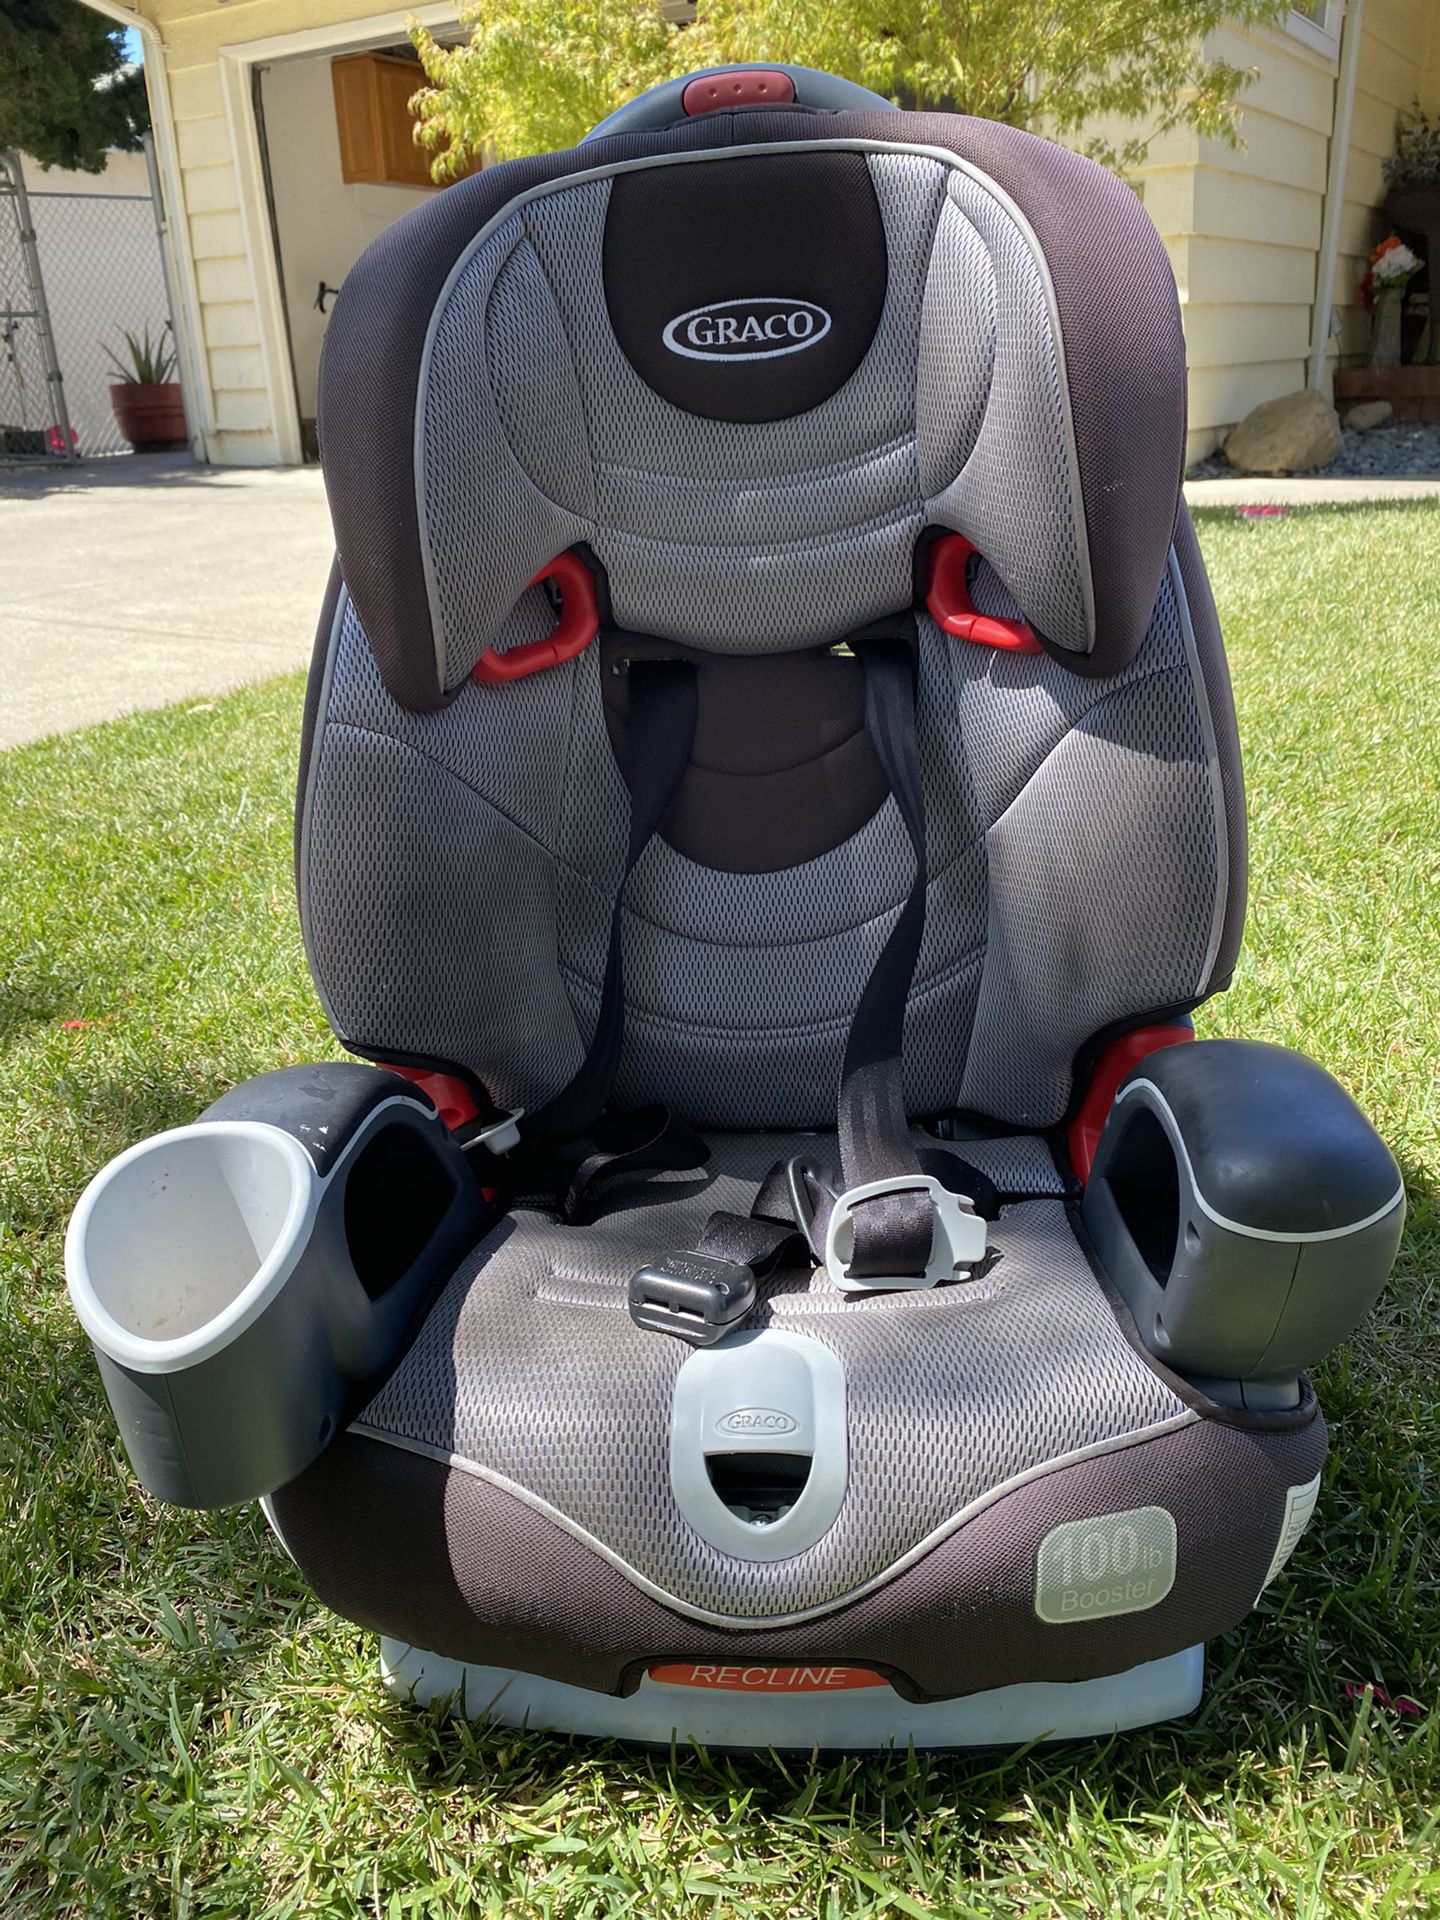 Graco Recline 100lb Booster Car seat Kids